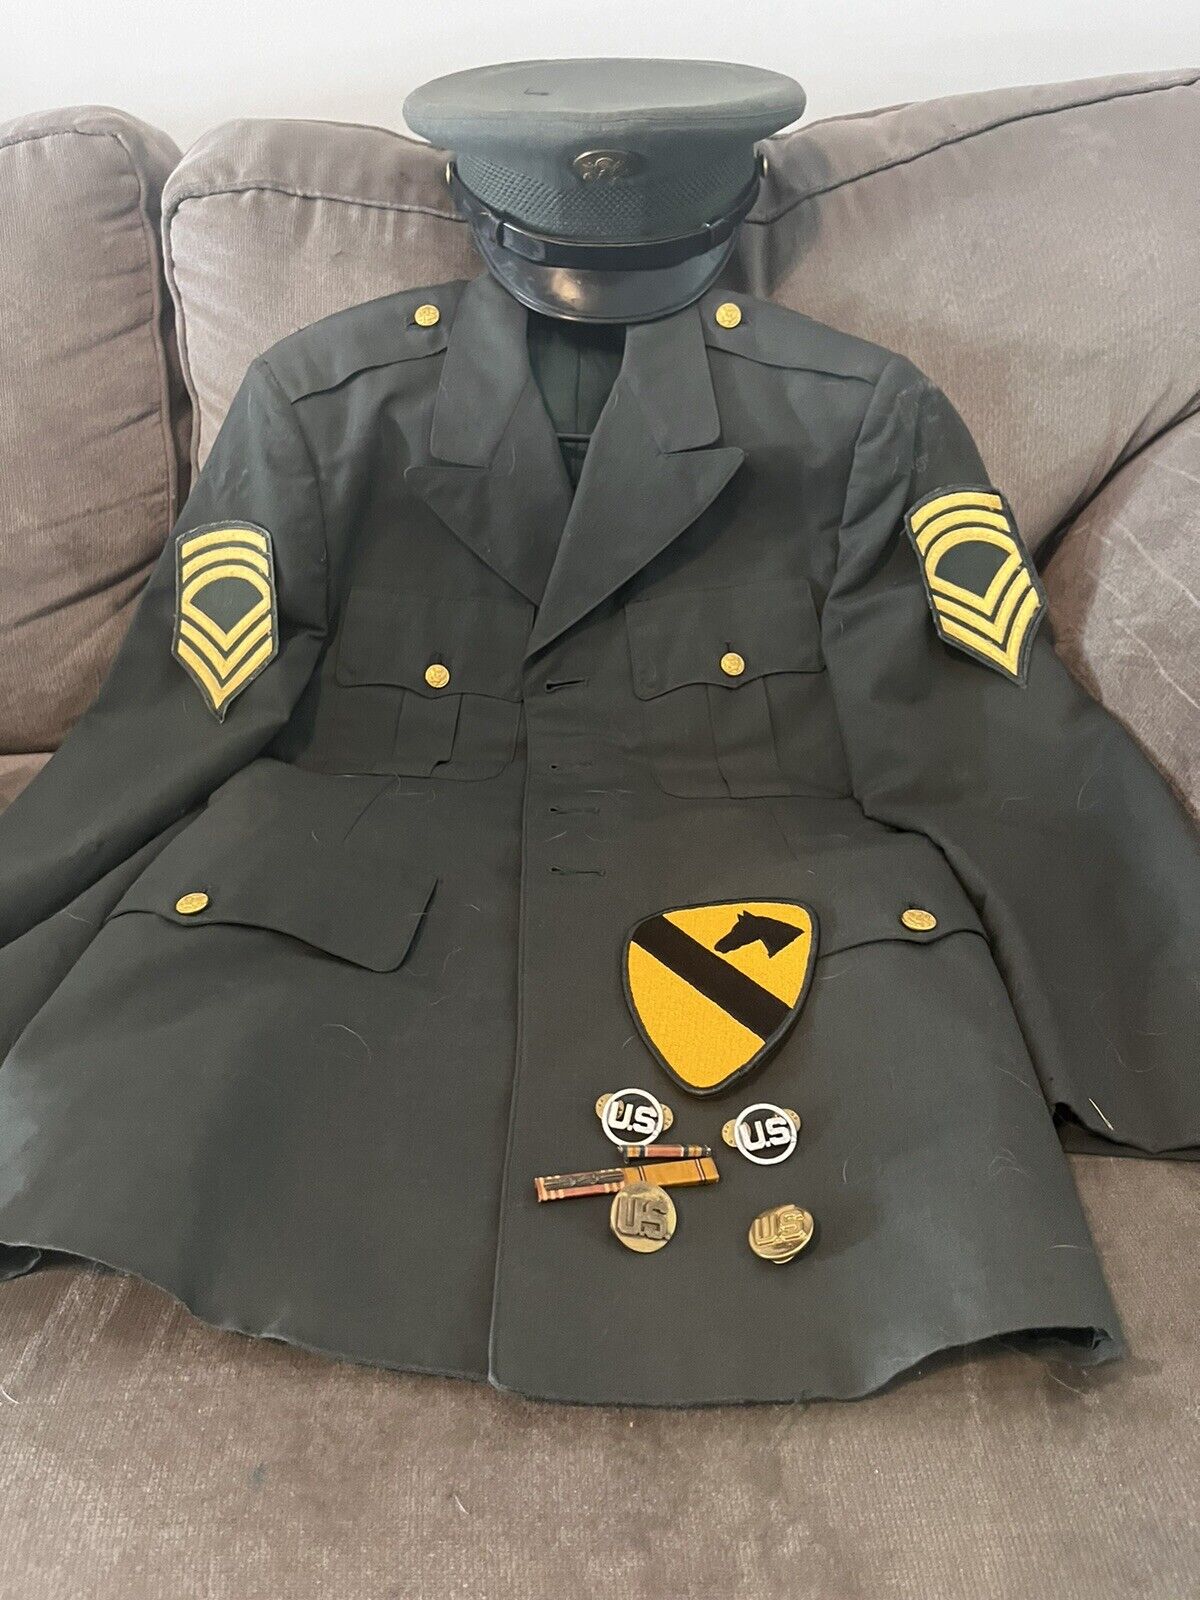 US Army Dress Green Vietnam Uniform Lot (Patches/Hat/Buttons/Bars)